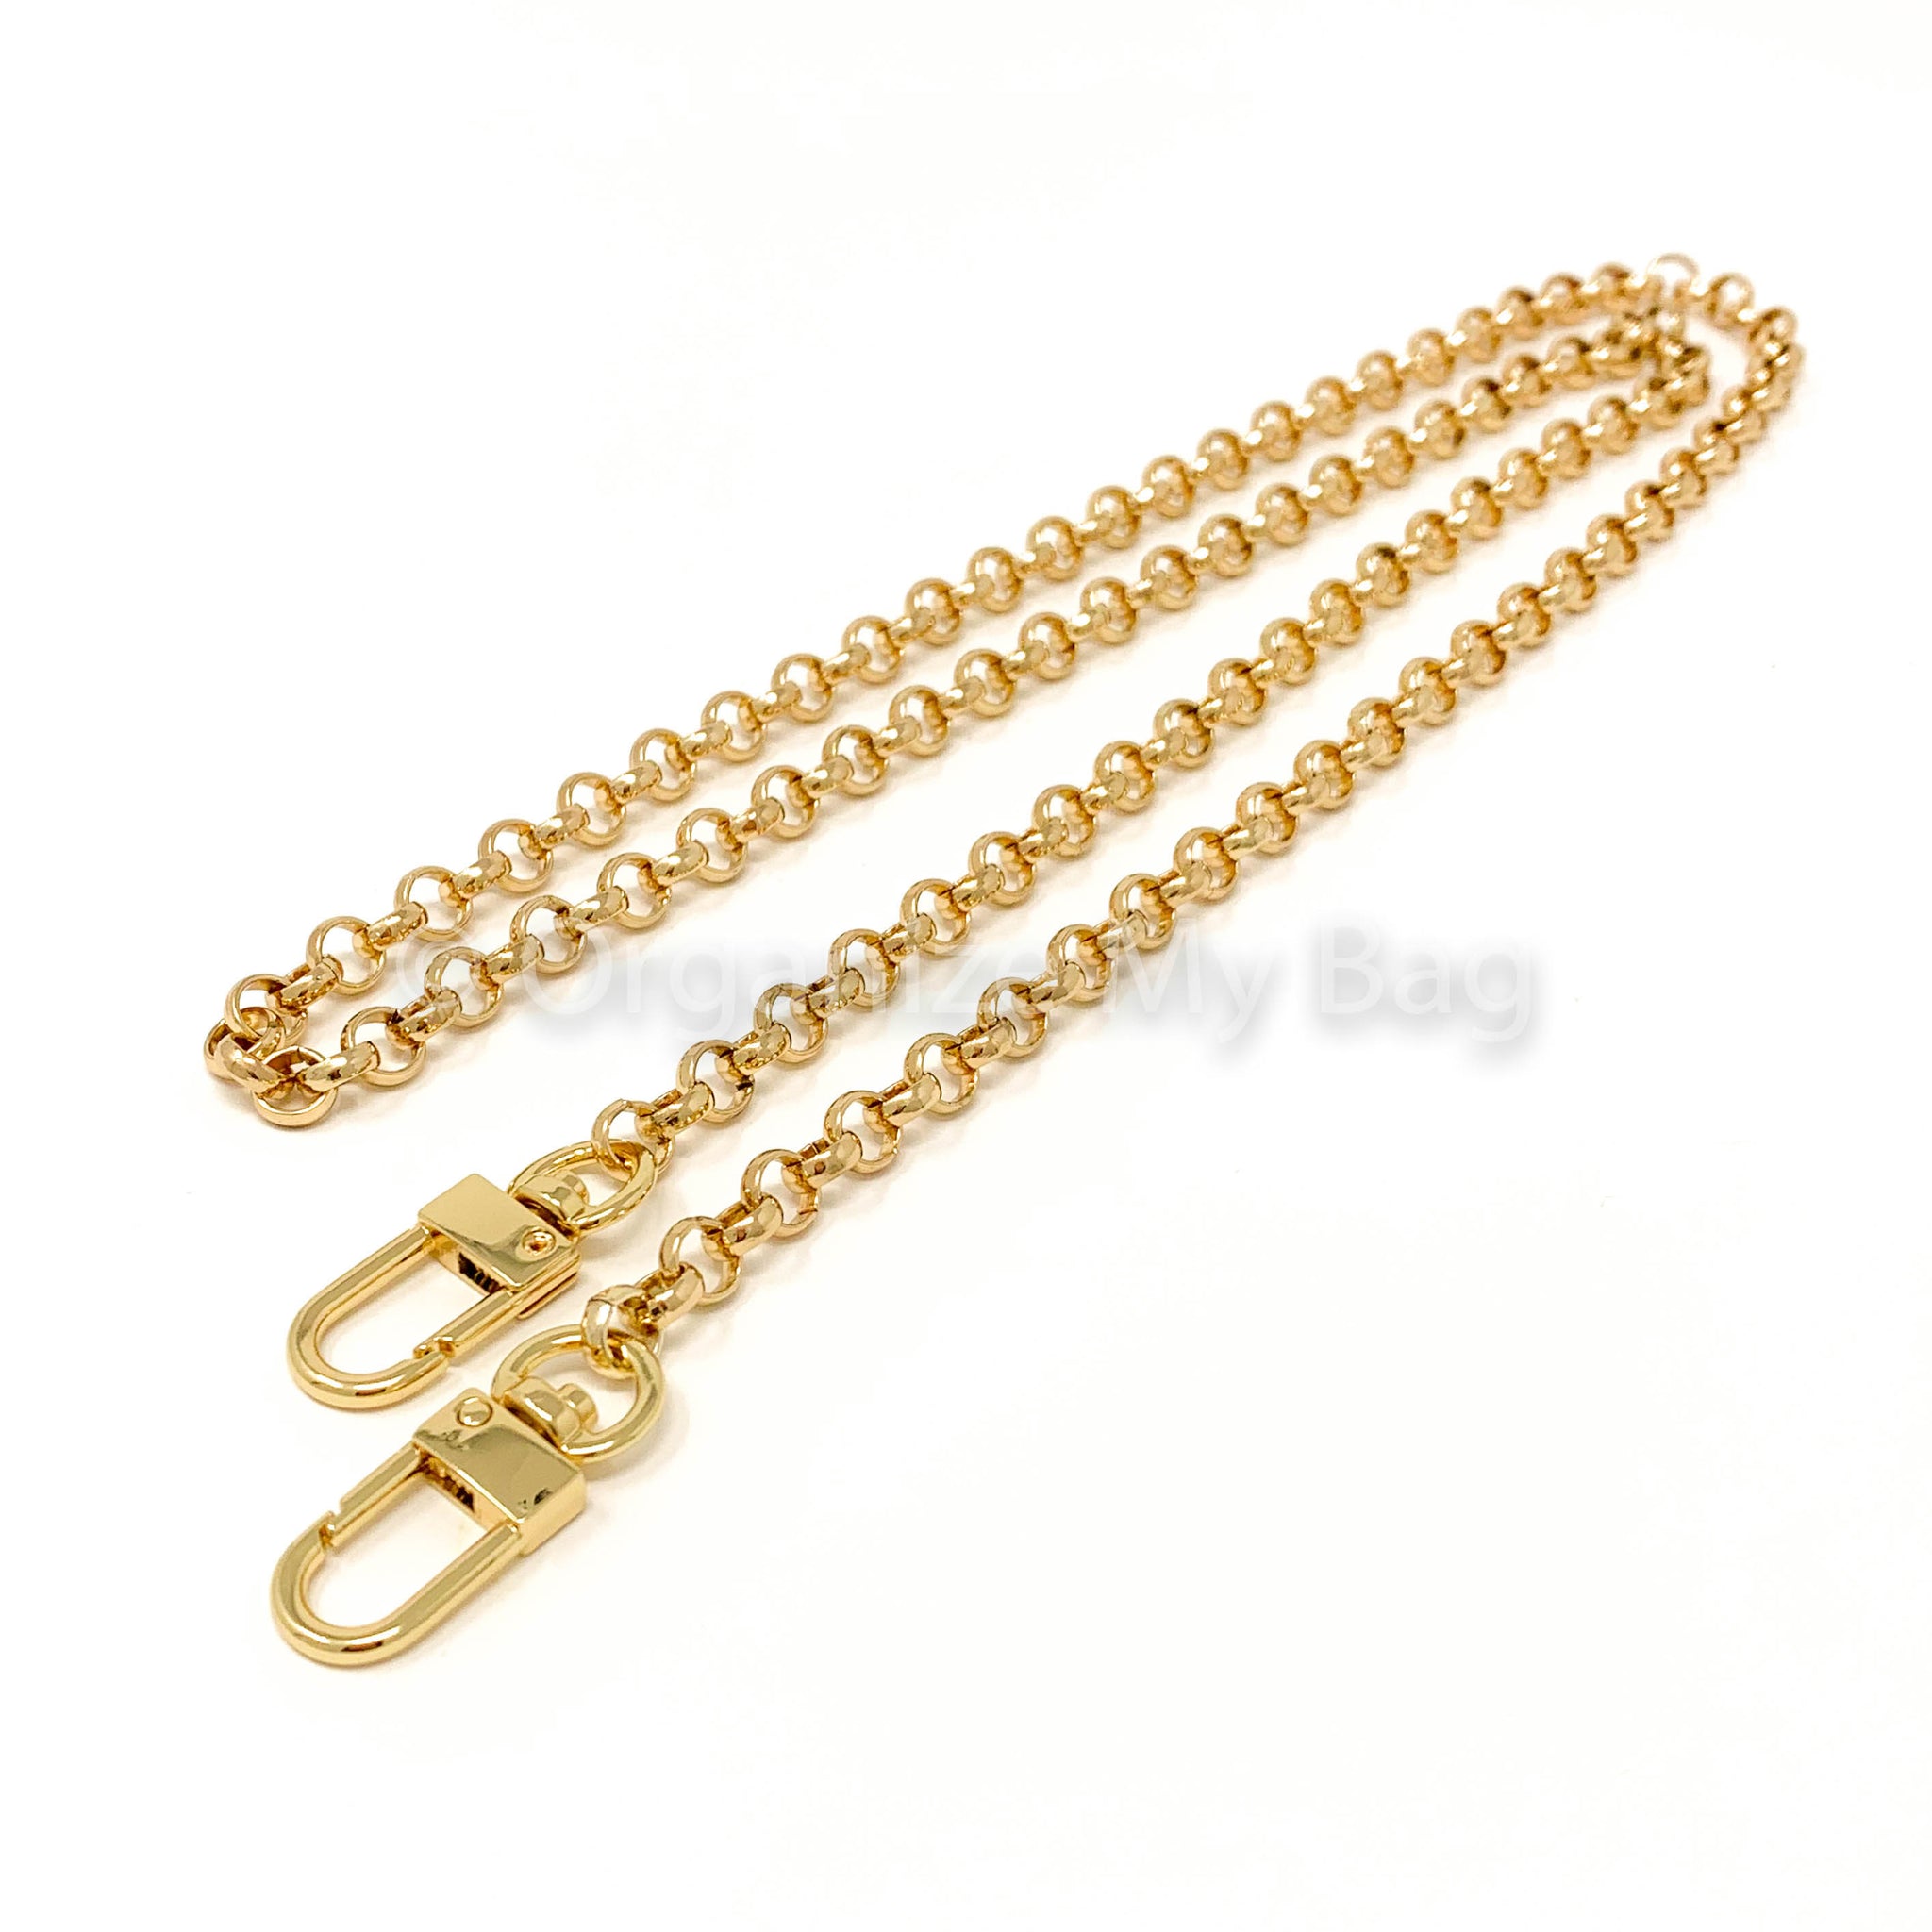  FULIGEGO Purse Chain Strap 47.2 Purse Chain Leather